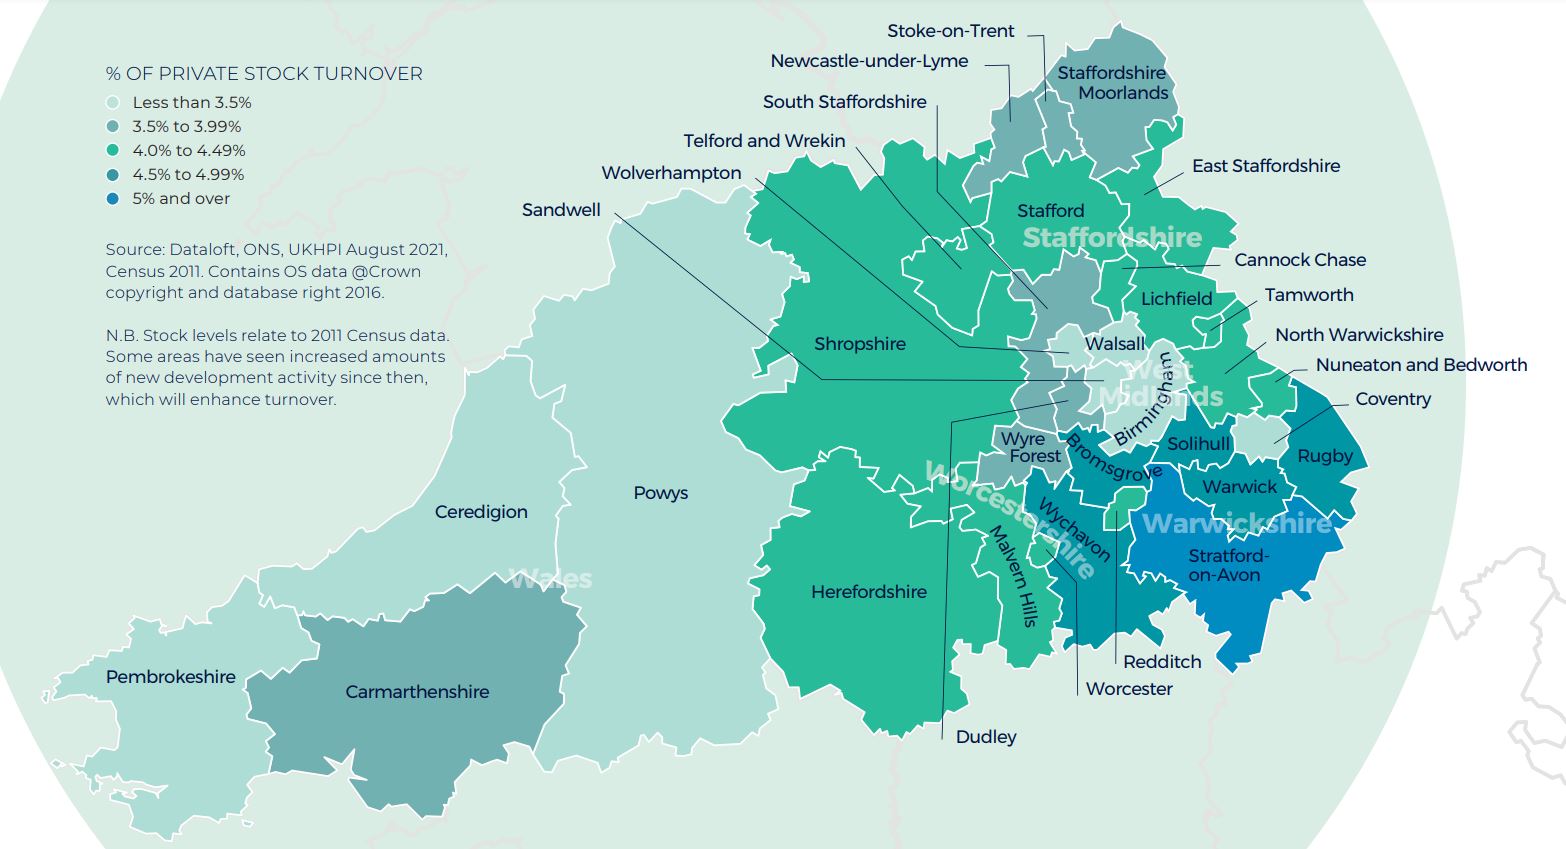 West Midlands Winter regional property market report 2021